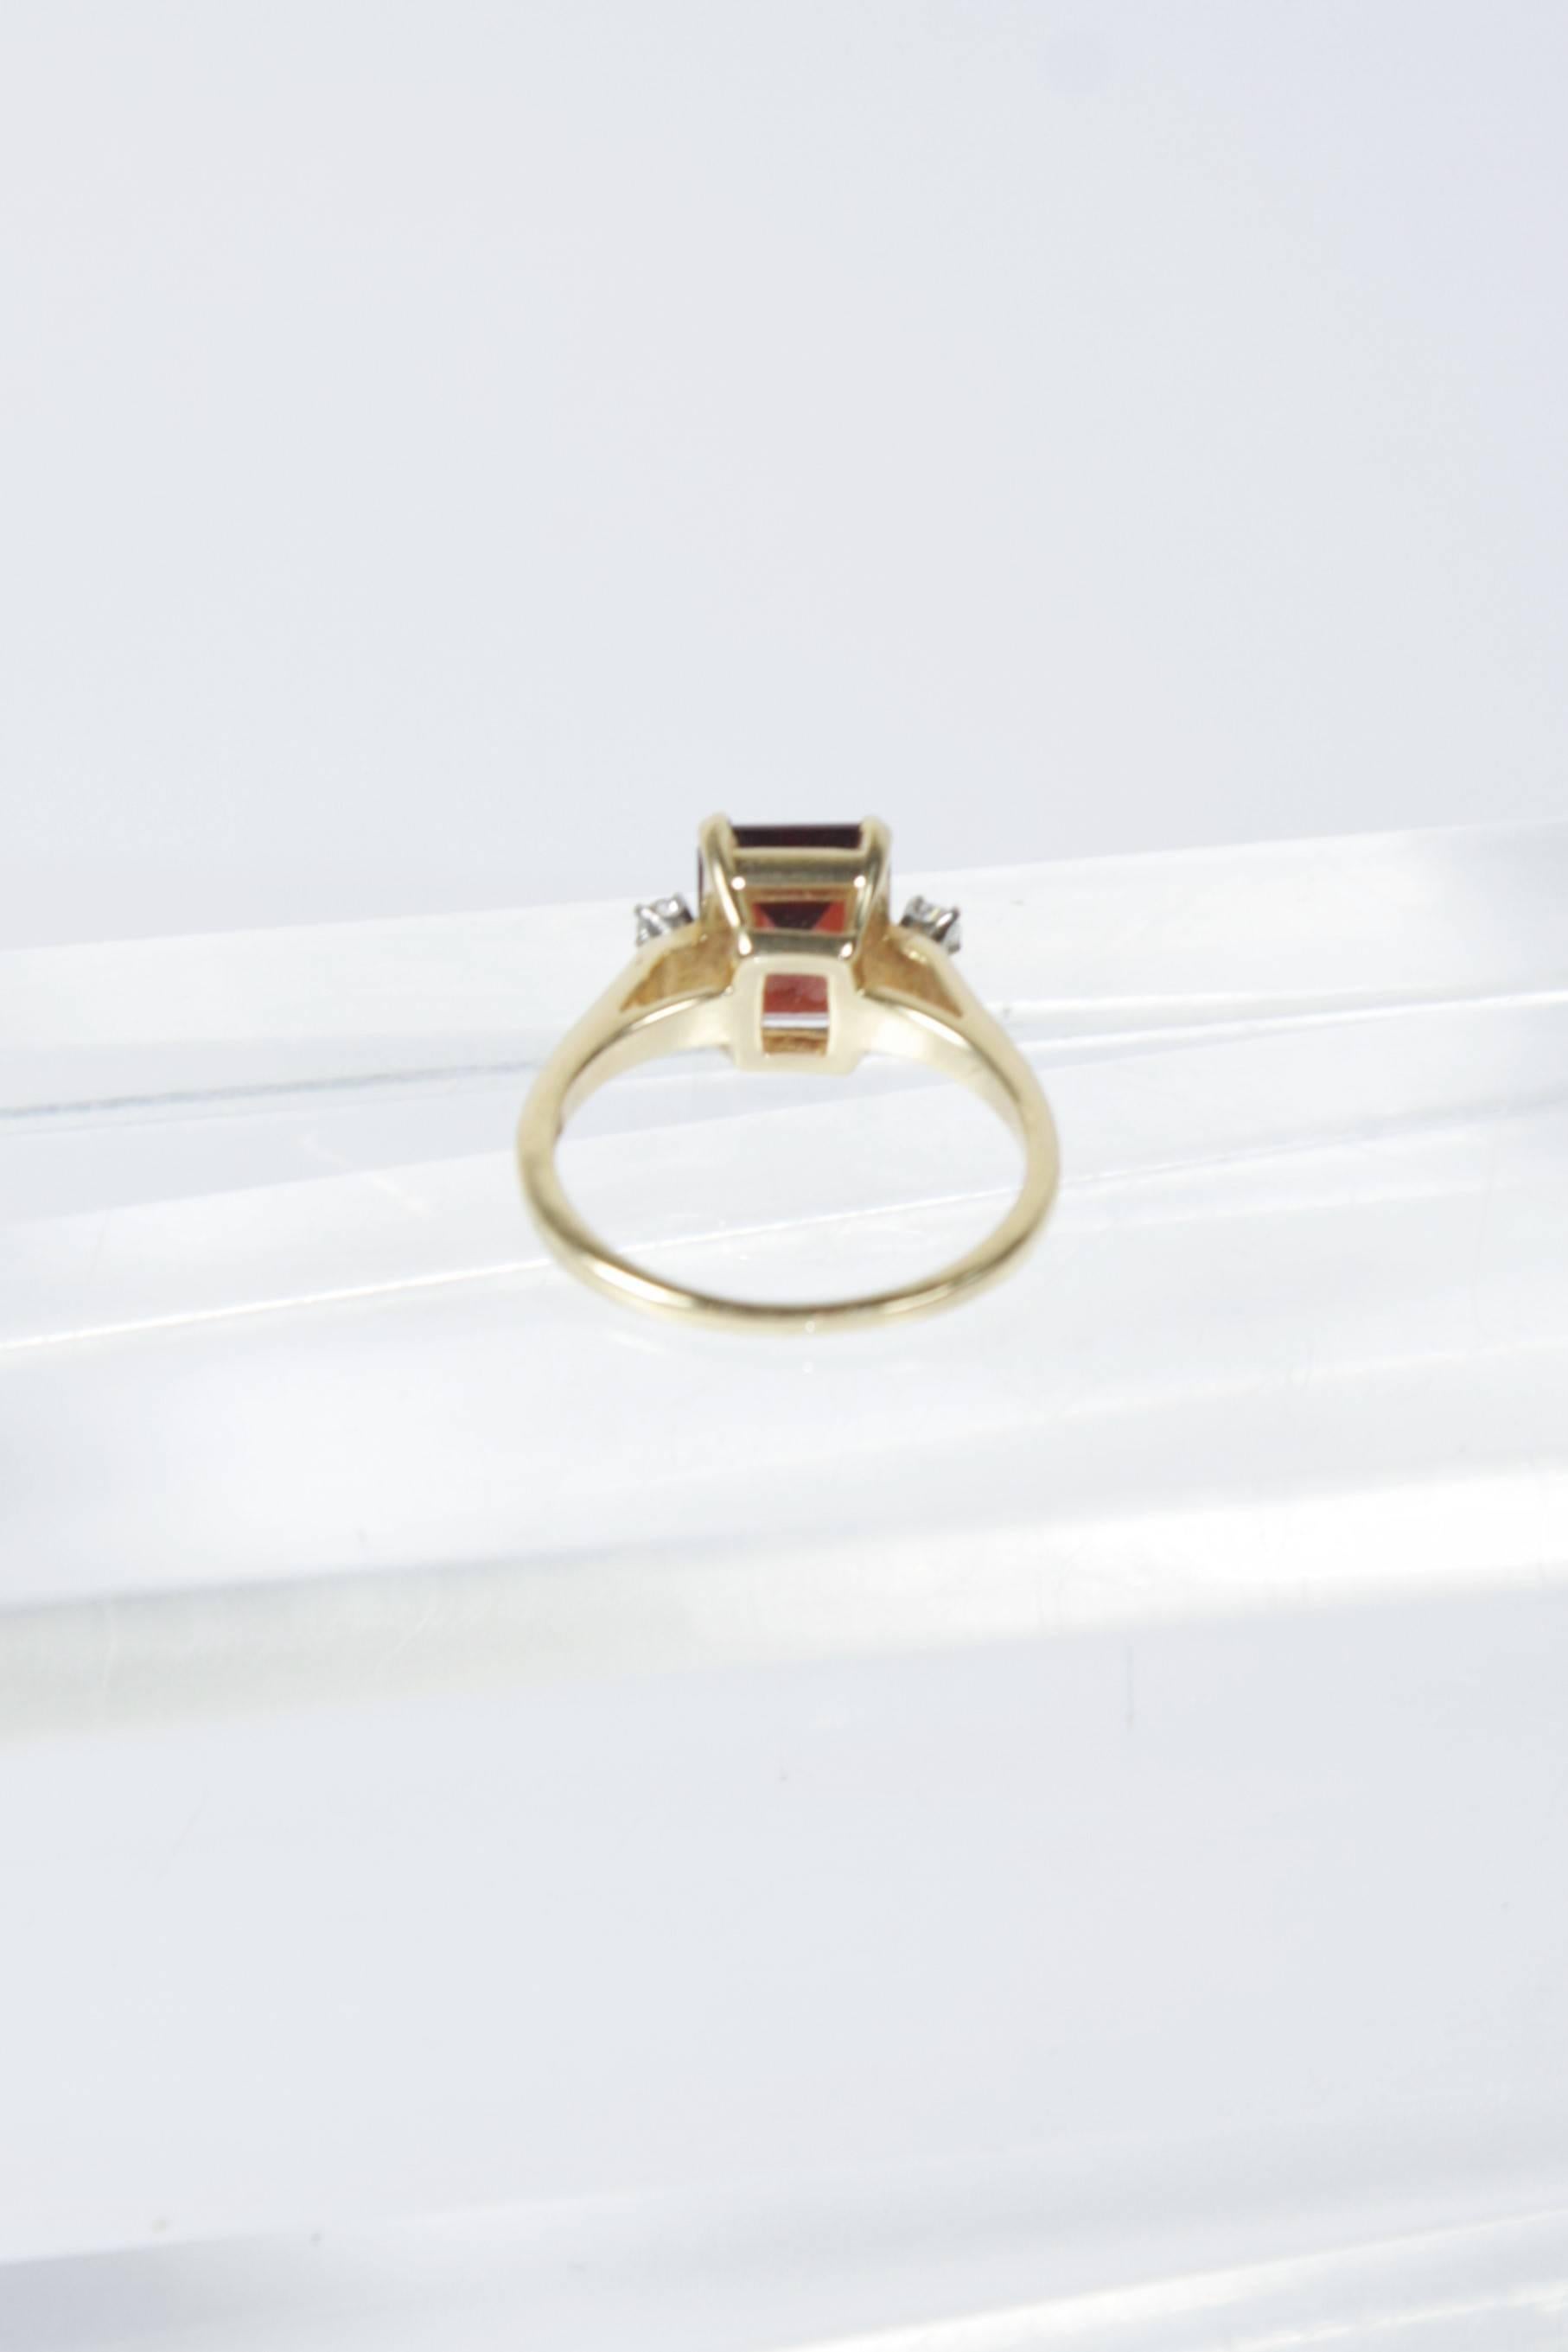 Emerald Cut Garnet and Diamond 14KT Yellow Gold Ring Size 6 2